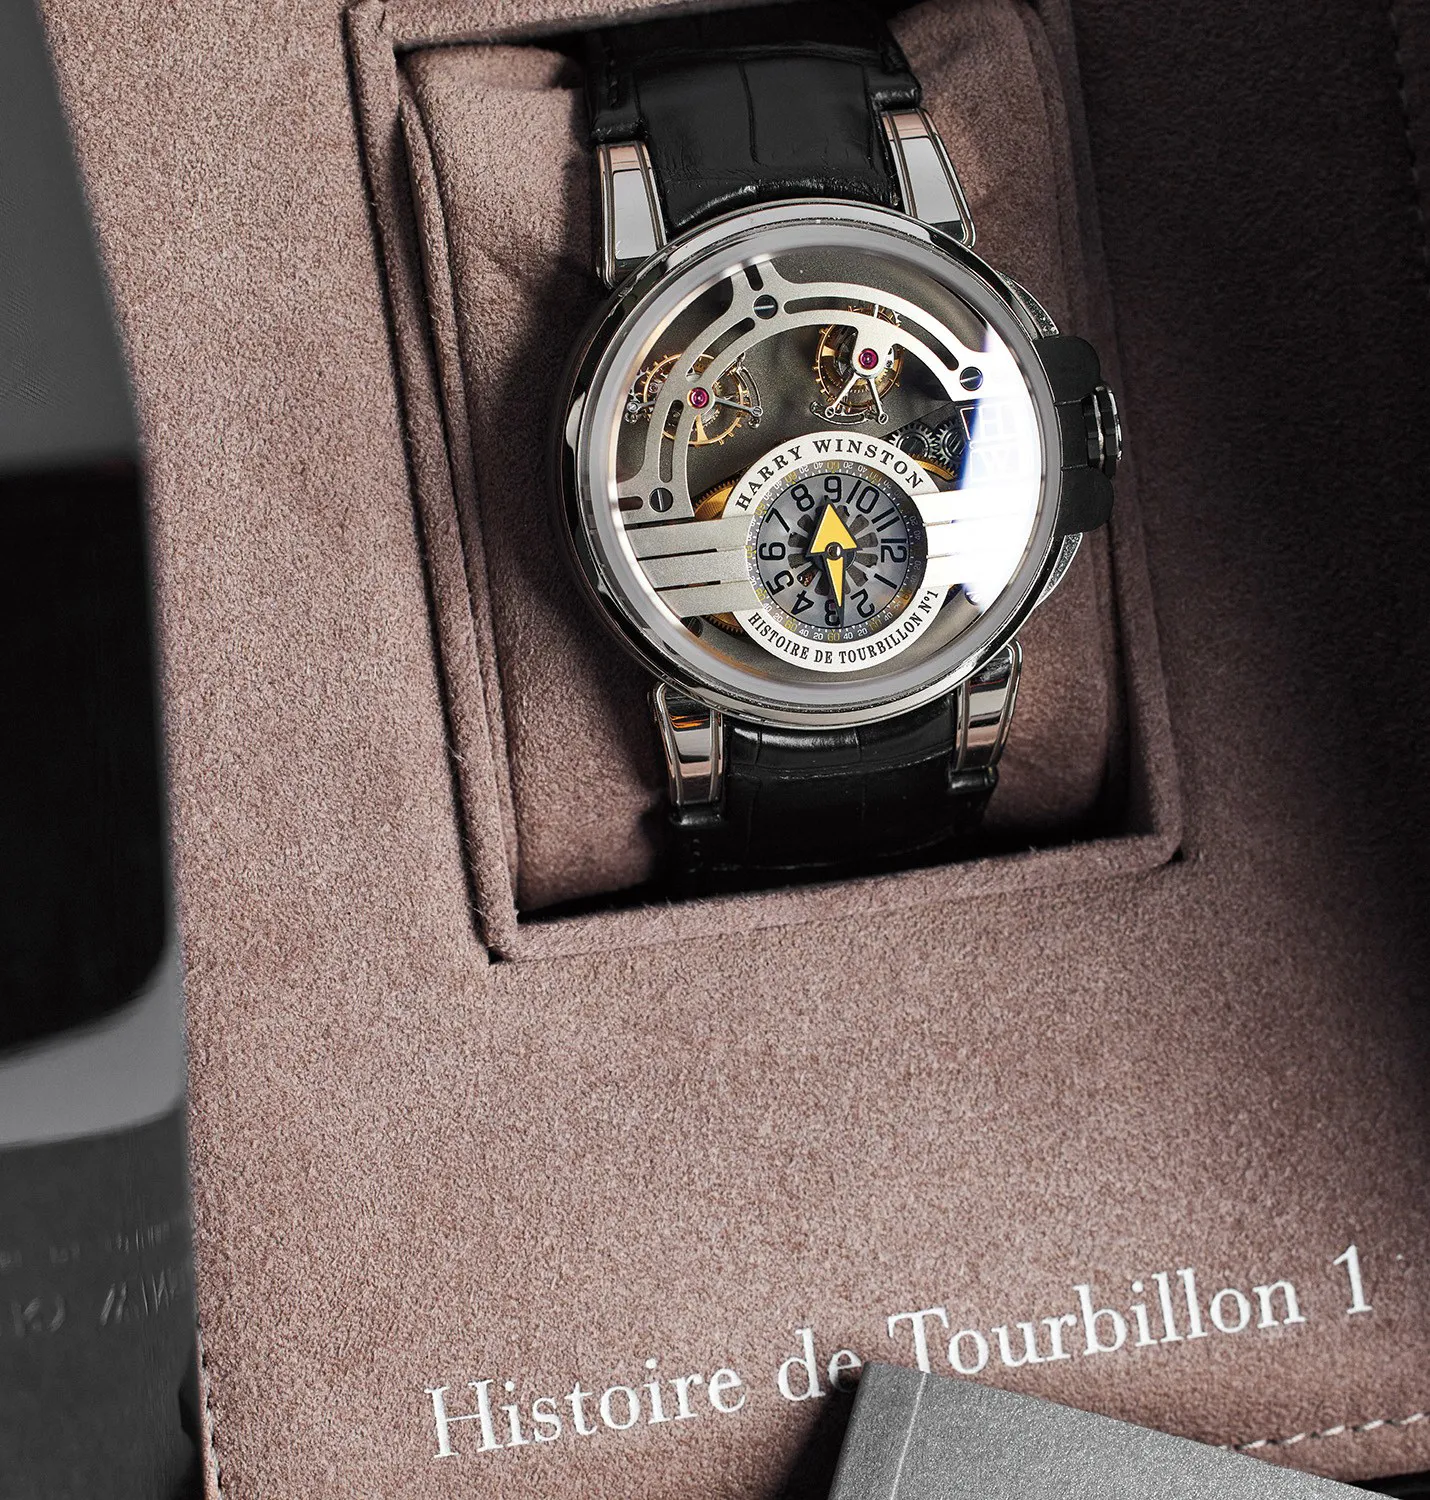 Harry Winston Histoire de Tourbillon HCOMDT48WZ001 48mm White gold and zalium Skeletonized 1